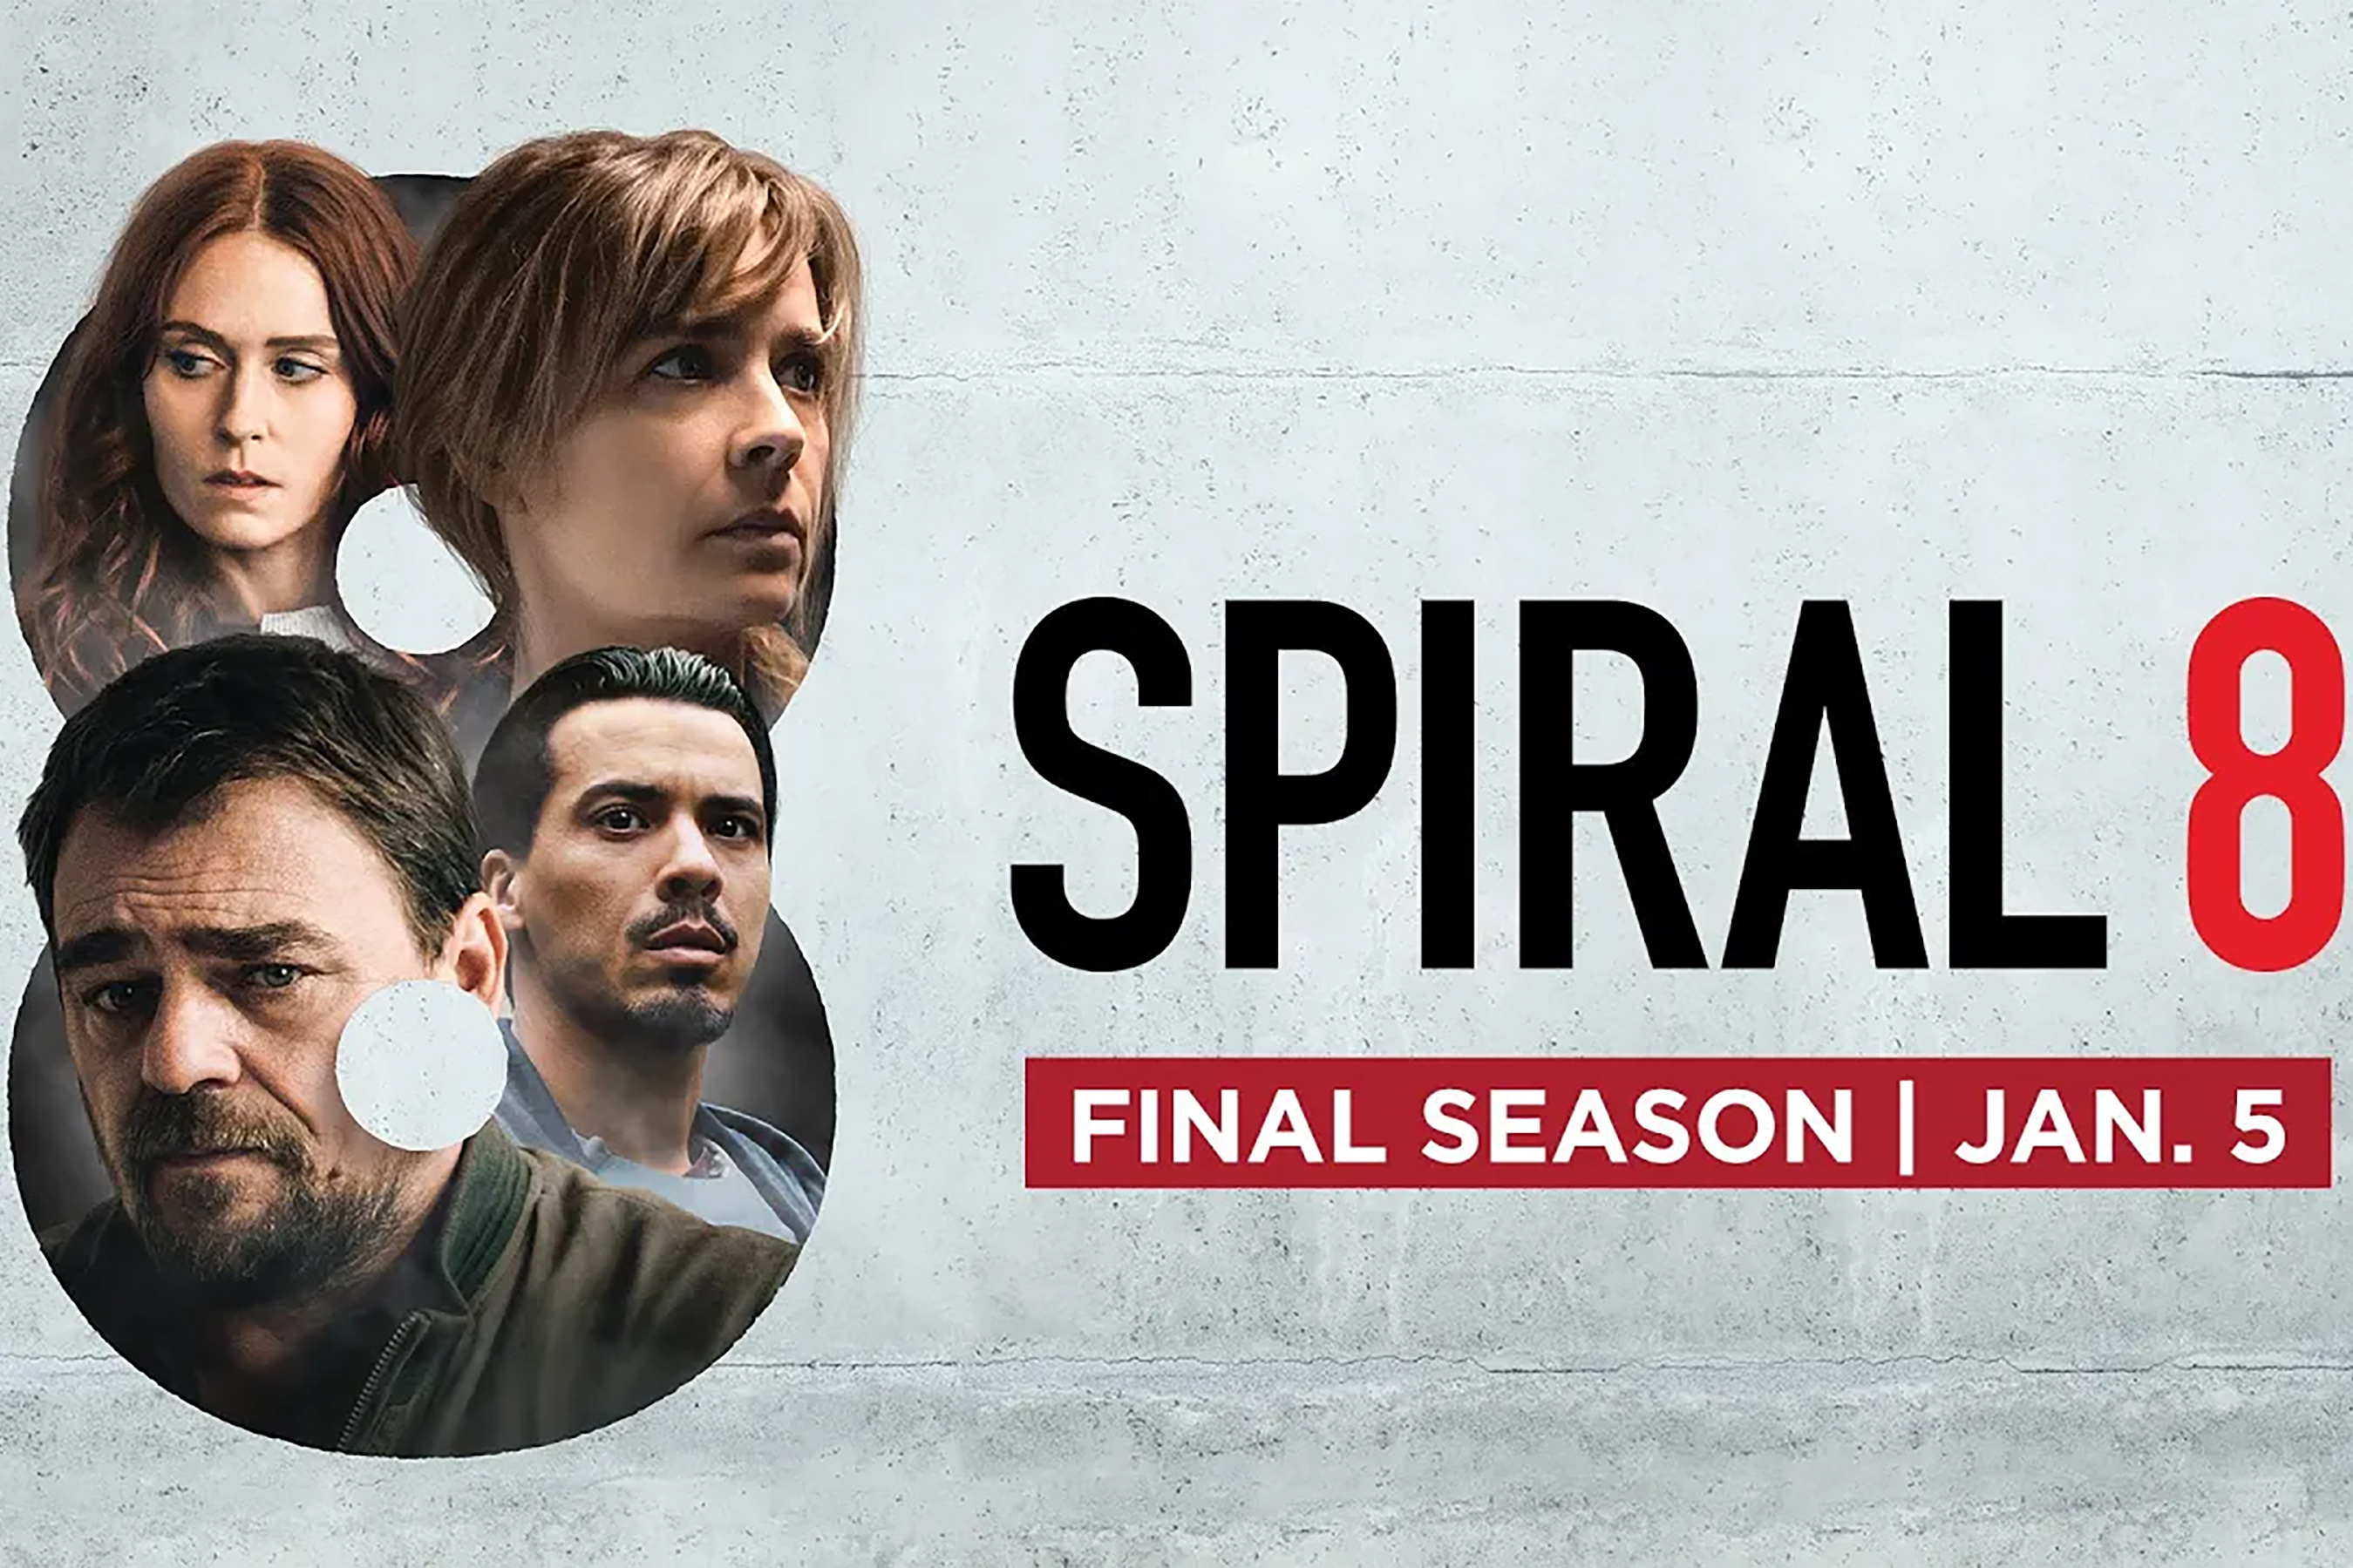 Spiral Season 8 (Official U.S. Trailer) - January 5